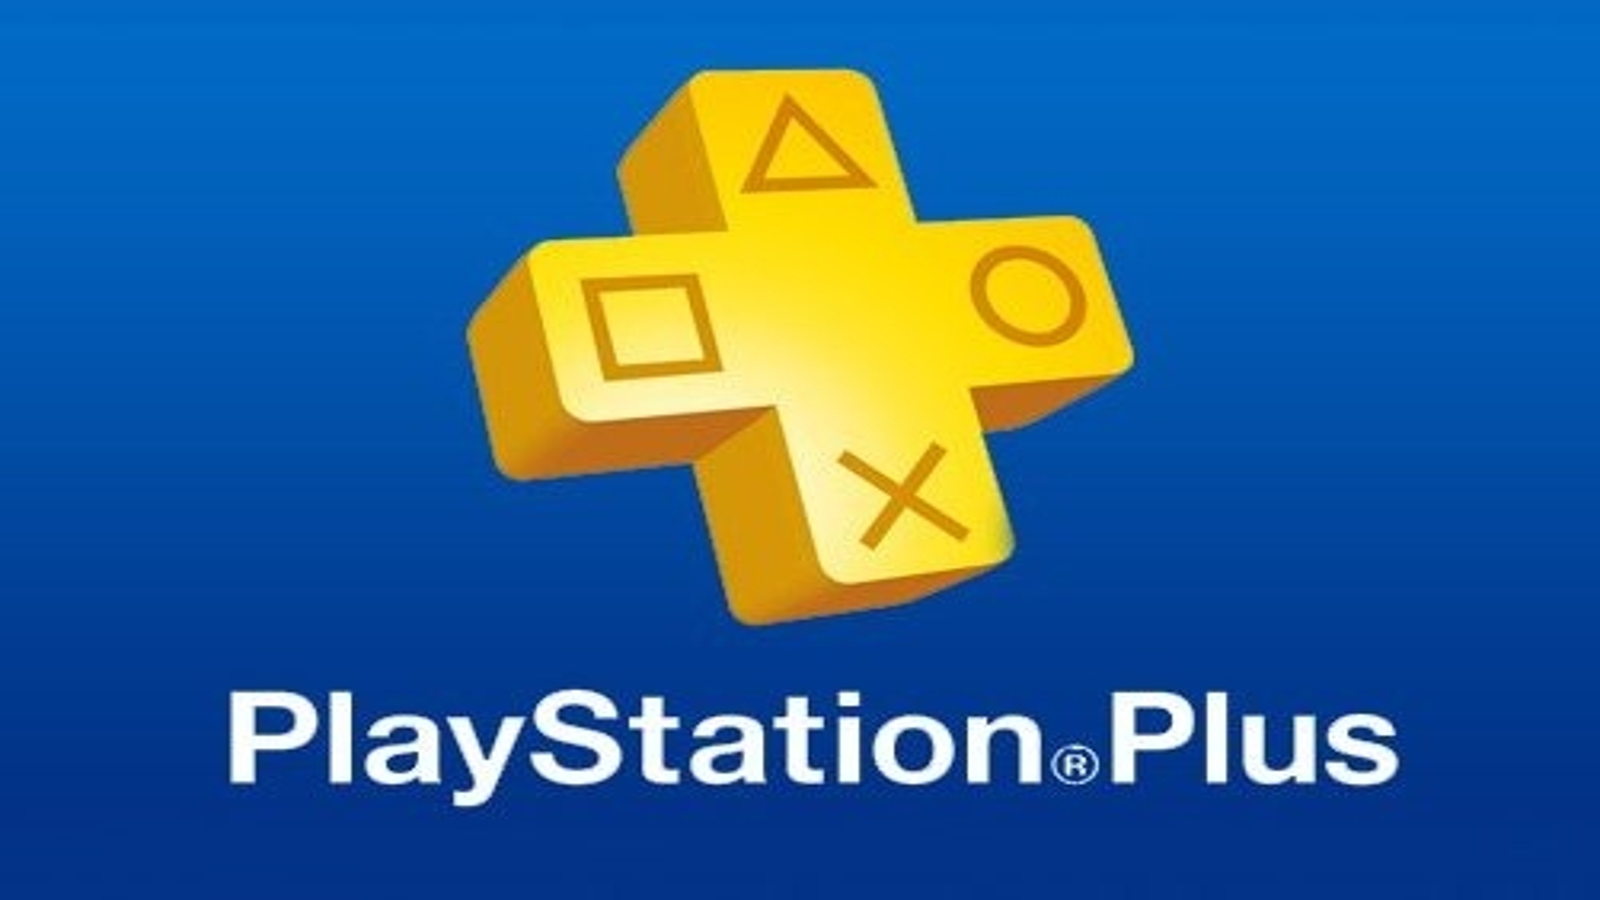 PS Plus Free Online Multiplayer Weekend